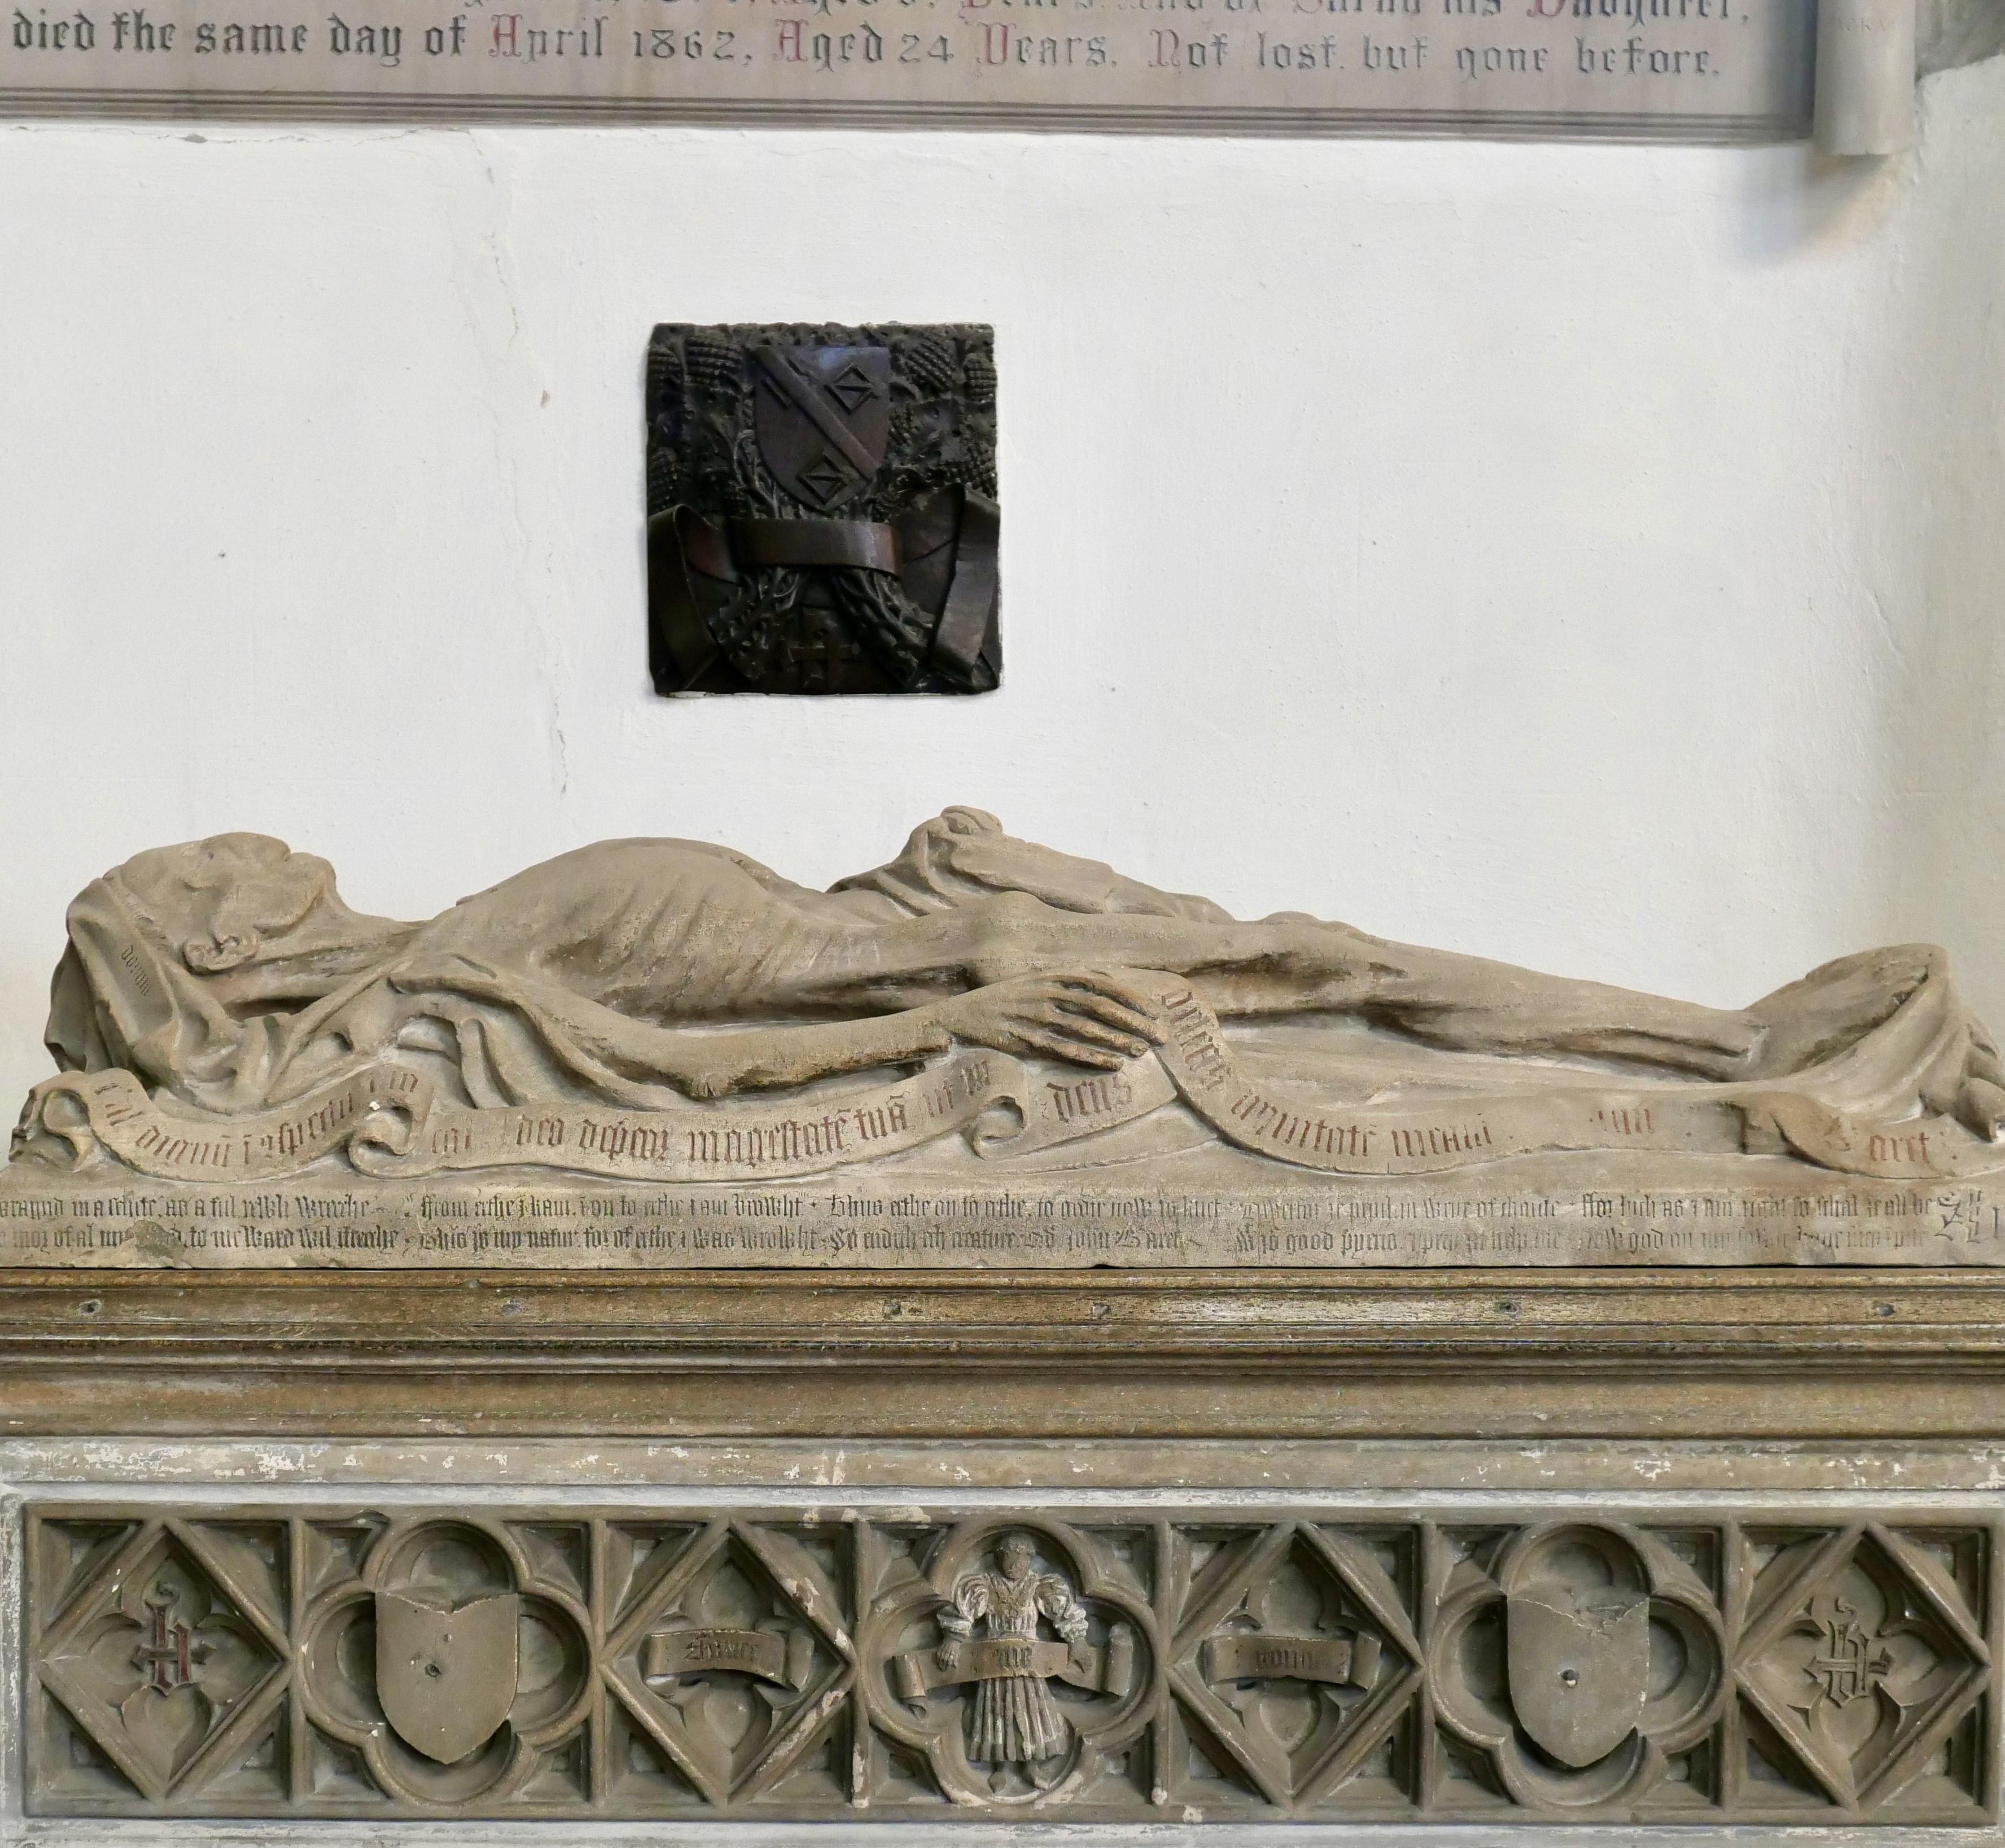 A photograph of a cadaver tomb inside a church